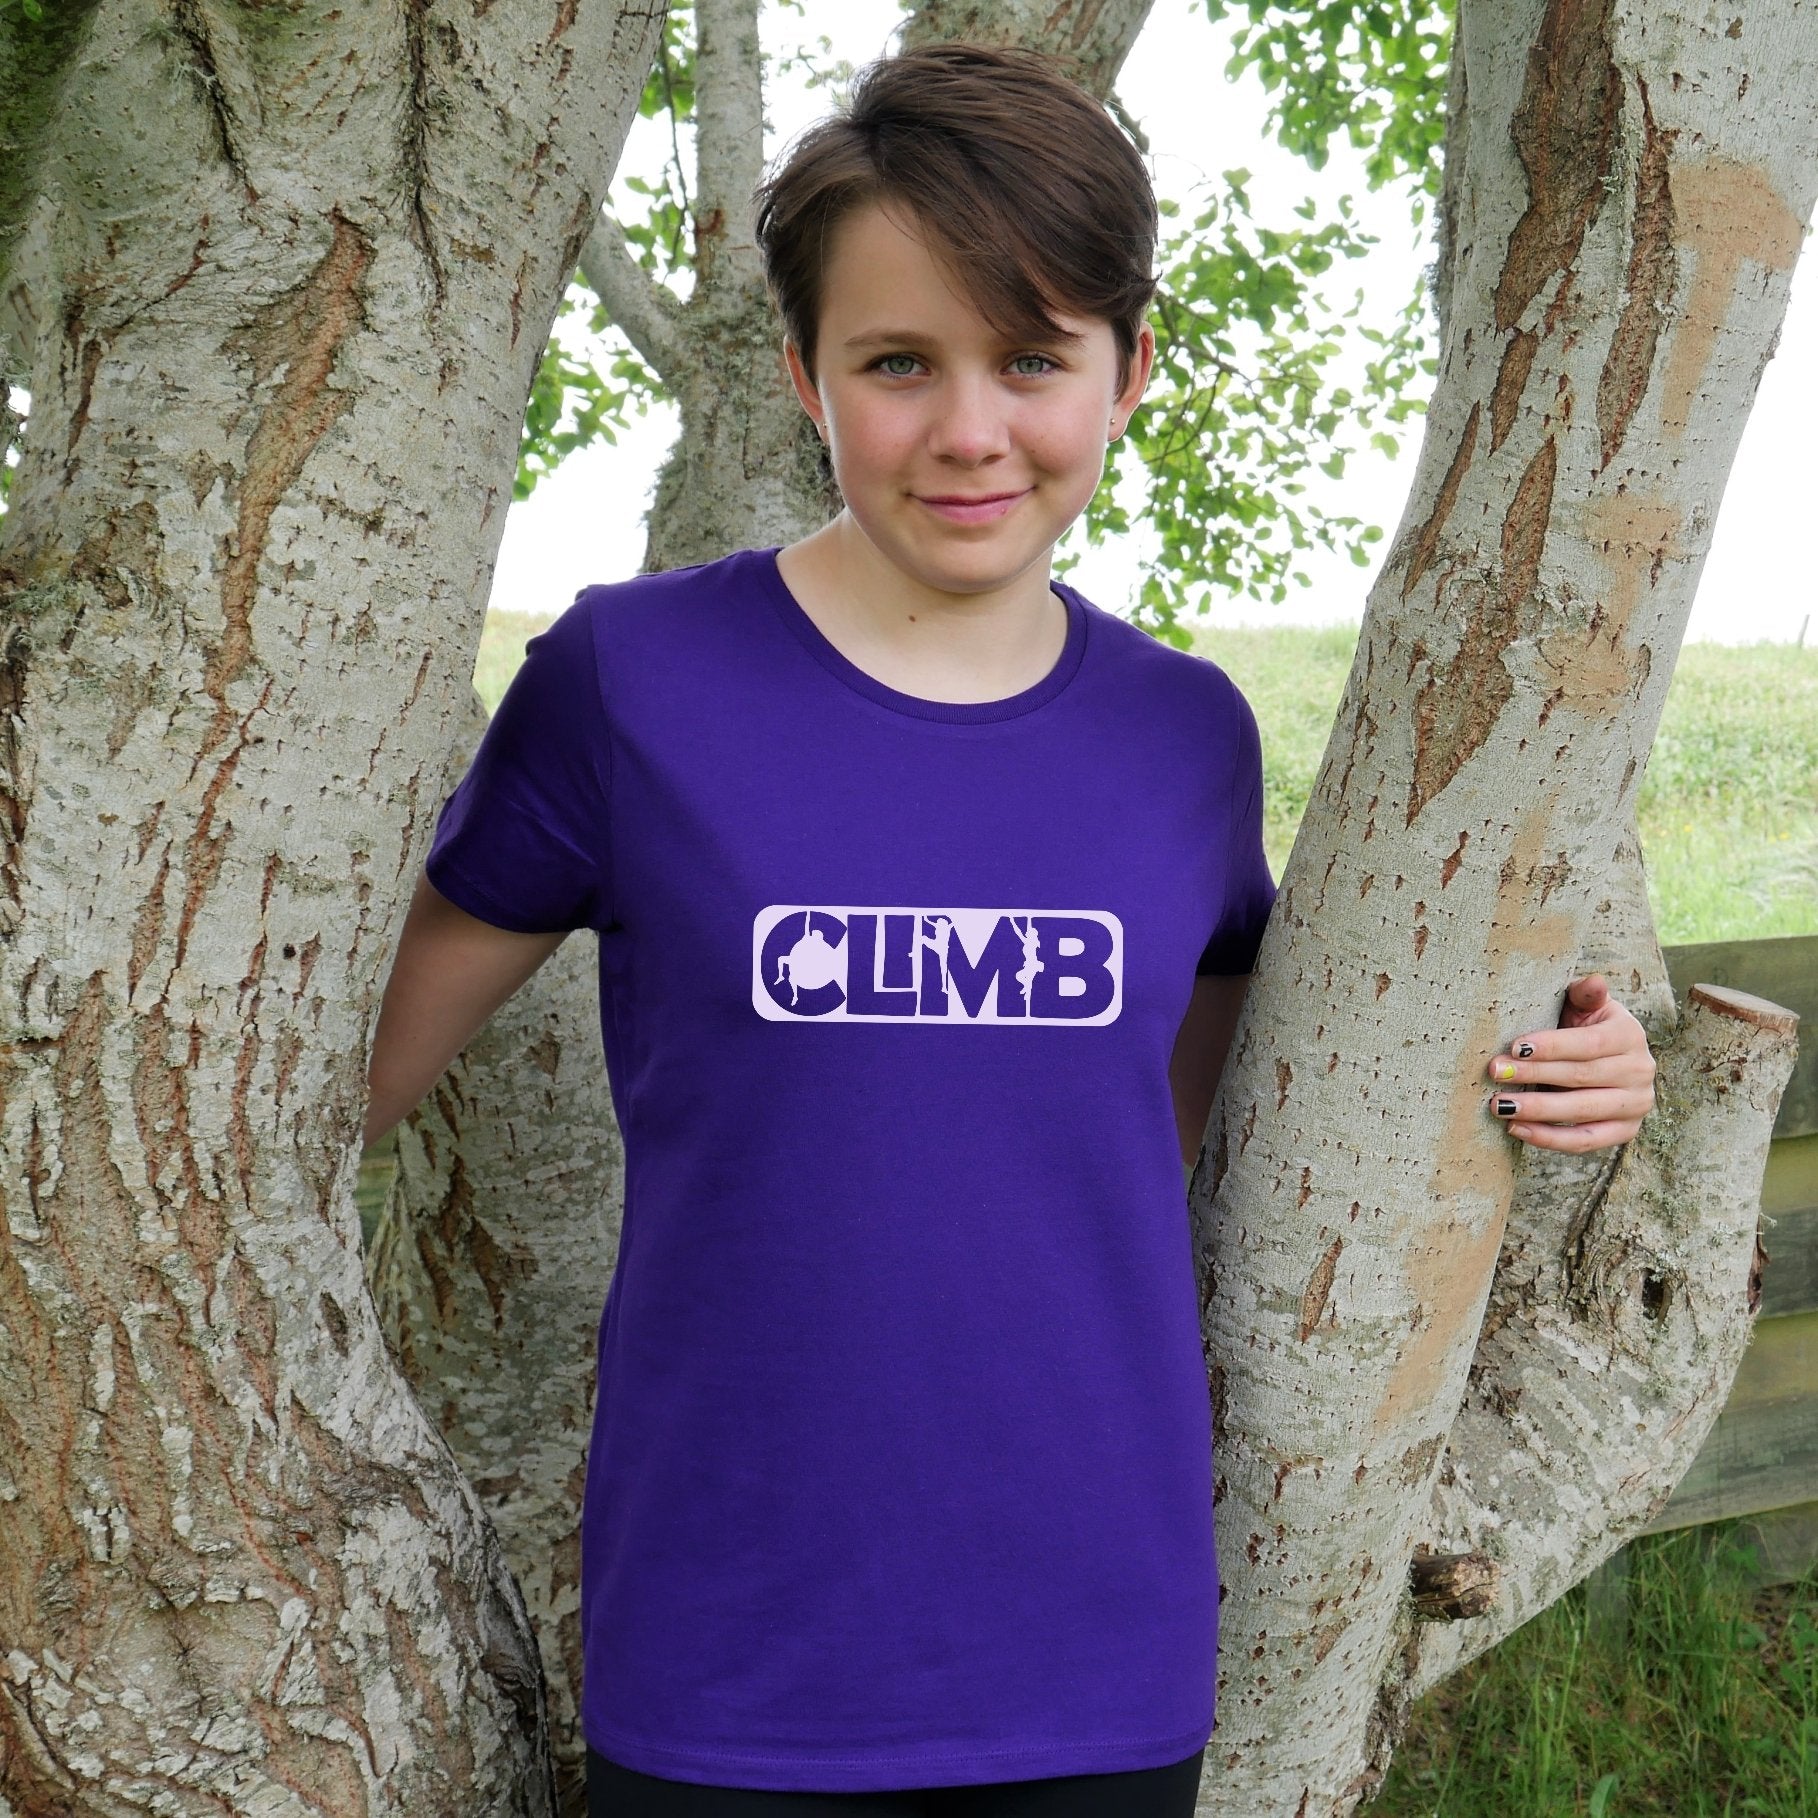 Climb! T-Shirt for Teens/Adults - Scarf Monkey